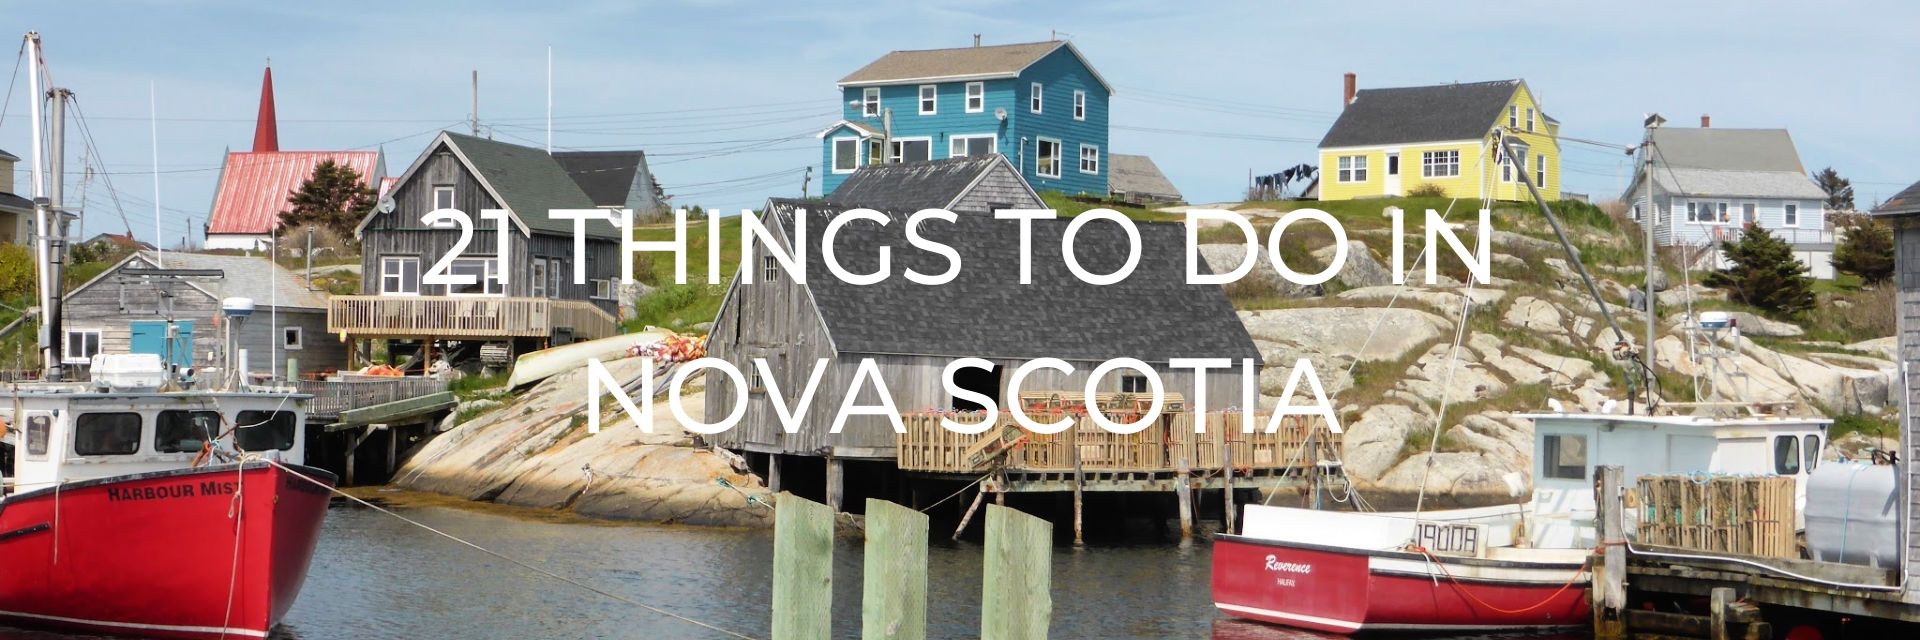 Things to Do in Nova Scotia Desktop Header Image